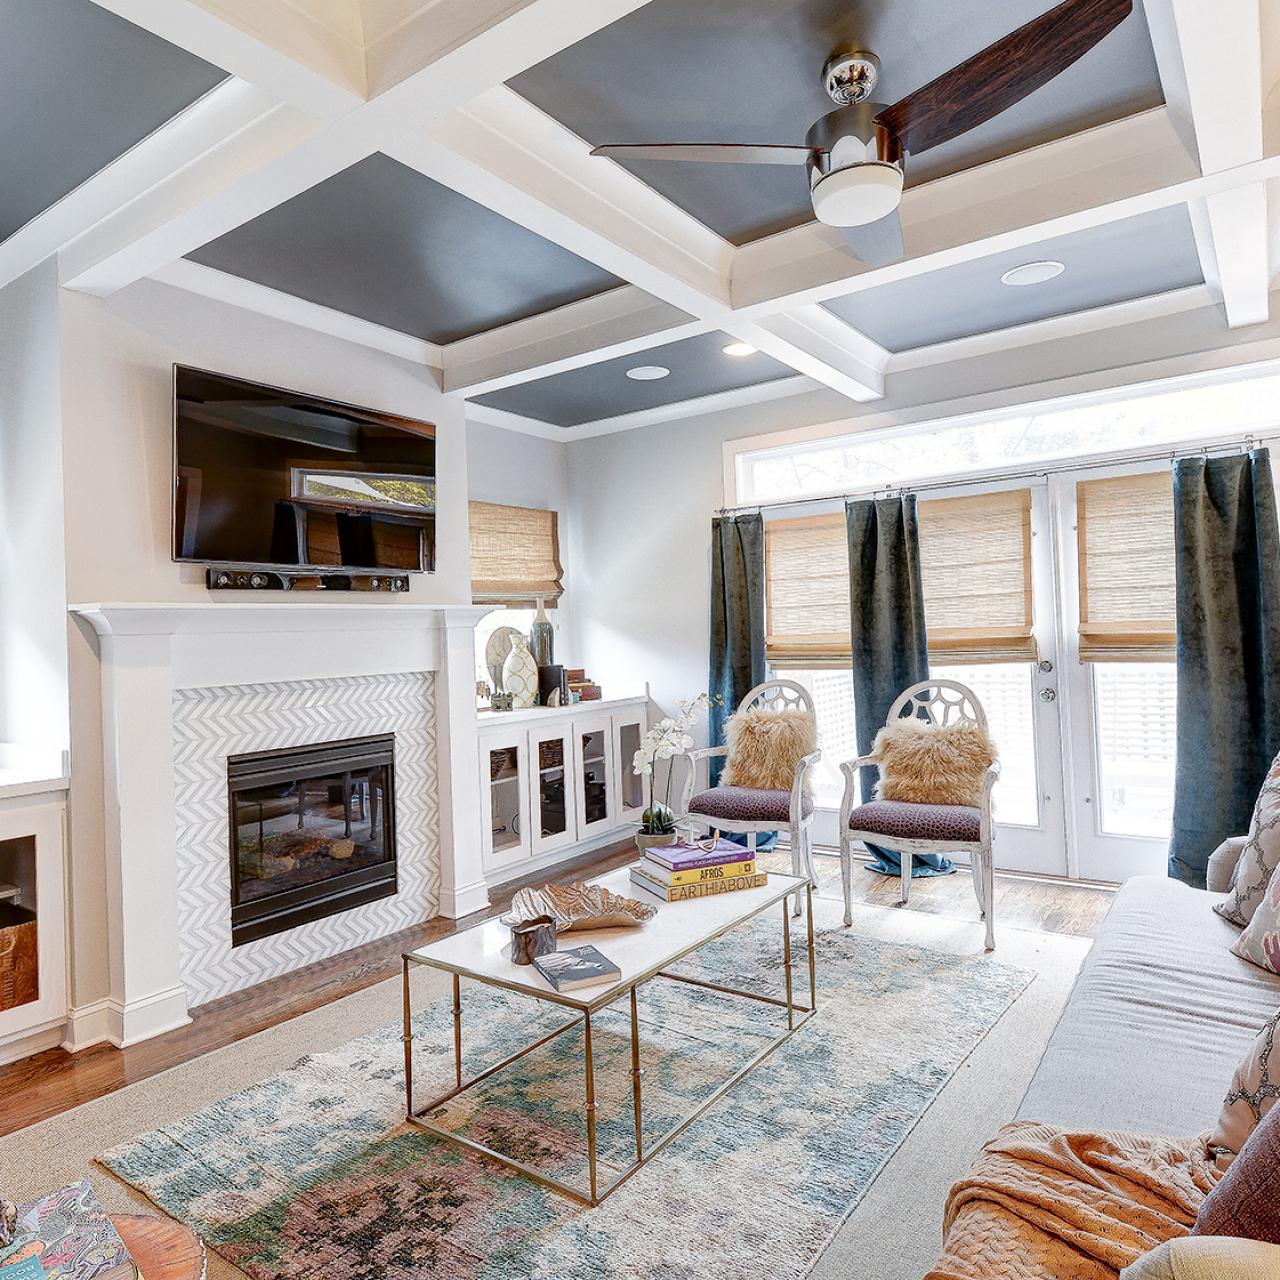 26 Stunning Ceiling Design Ideas - Best Ceiling Decor & Paint Patterns